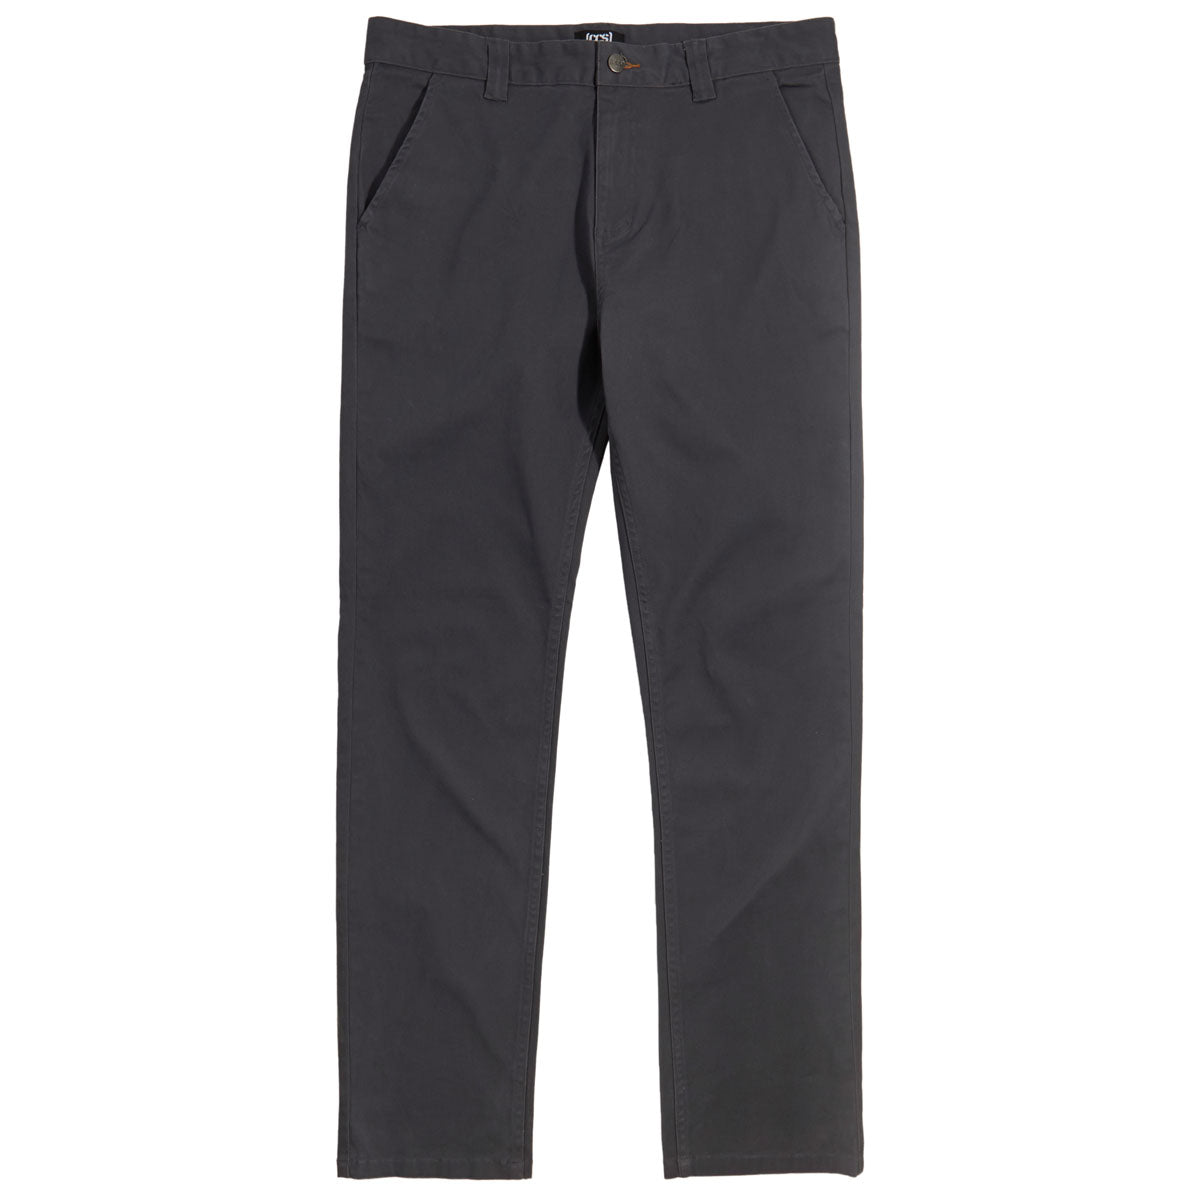 CCS Standard Plus Slim Chino Pants - Grey image 5